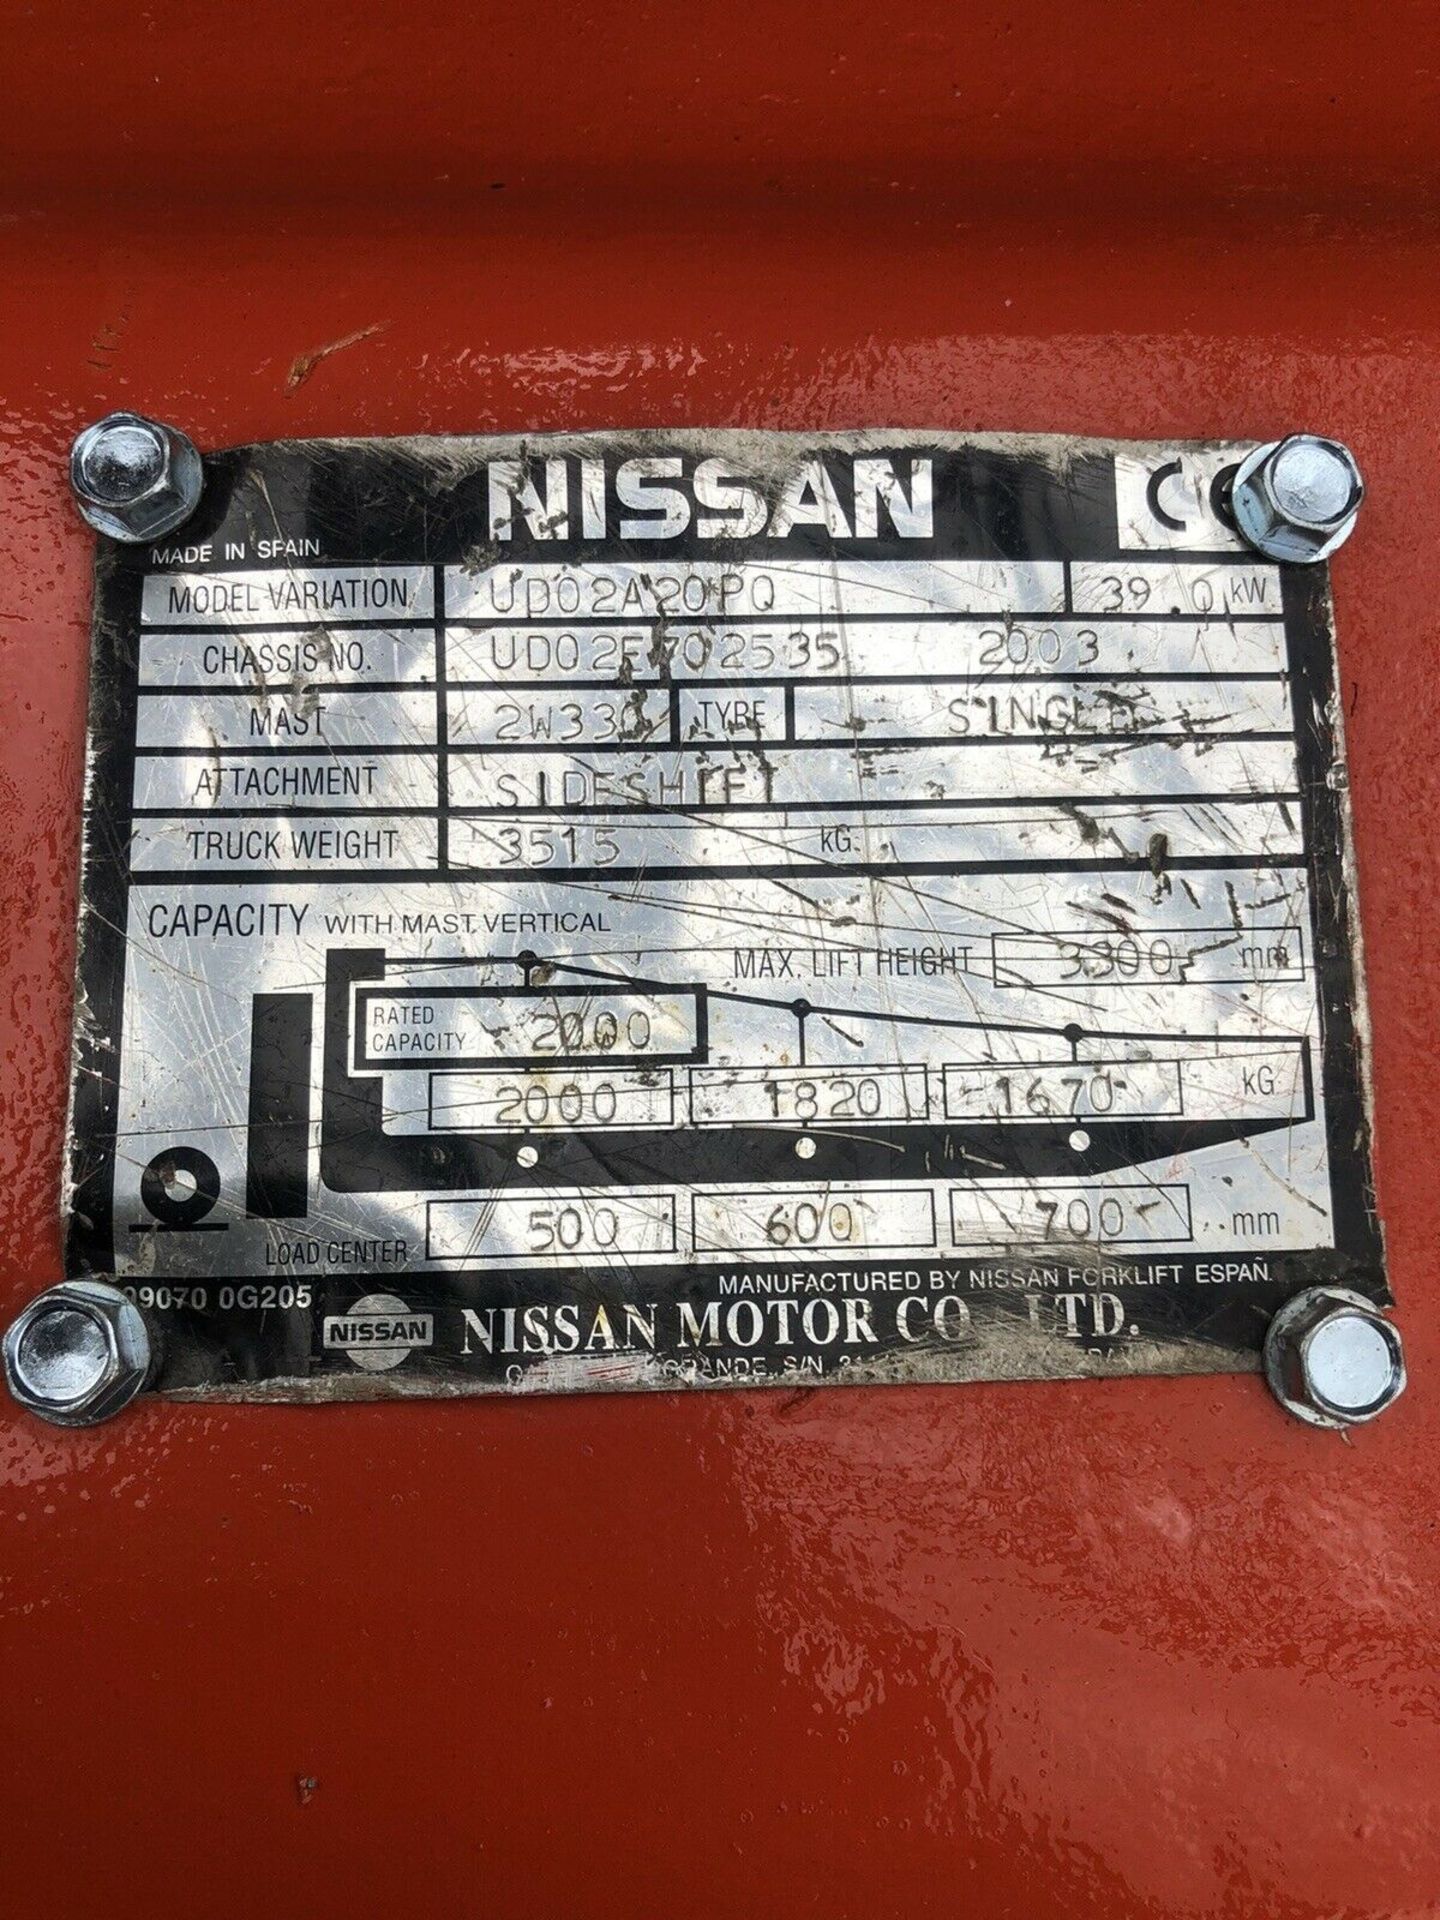 Nissan Gas Forklift Truck - Image 4 of 4